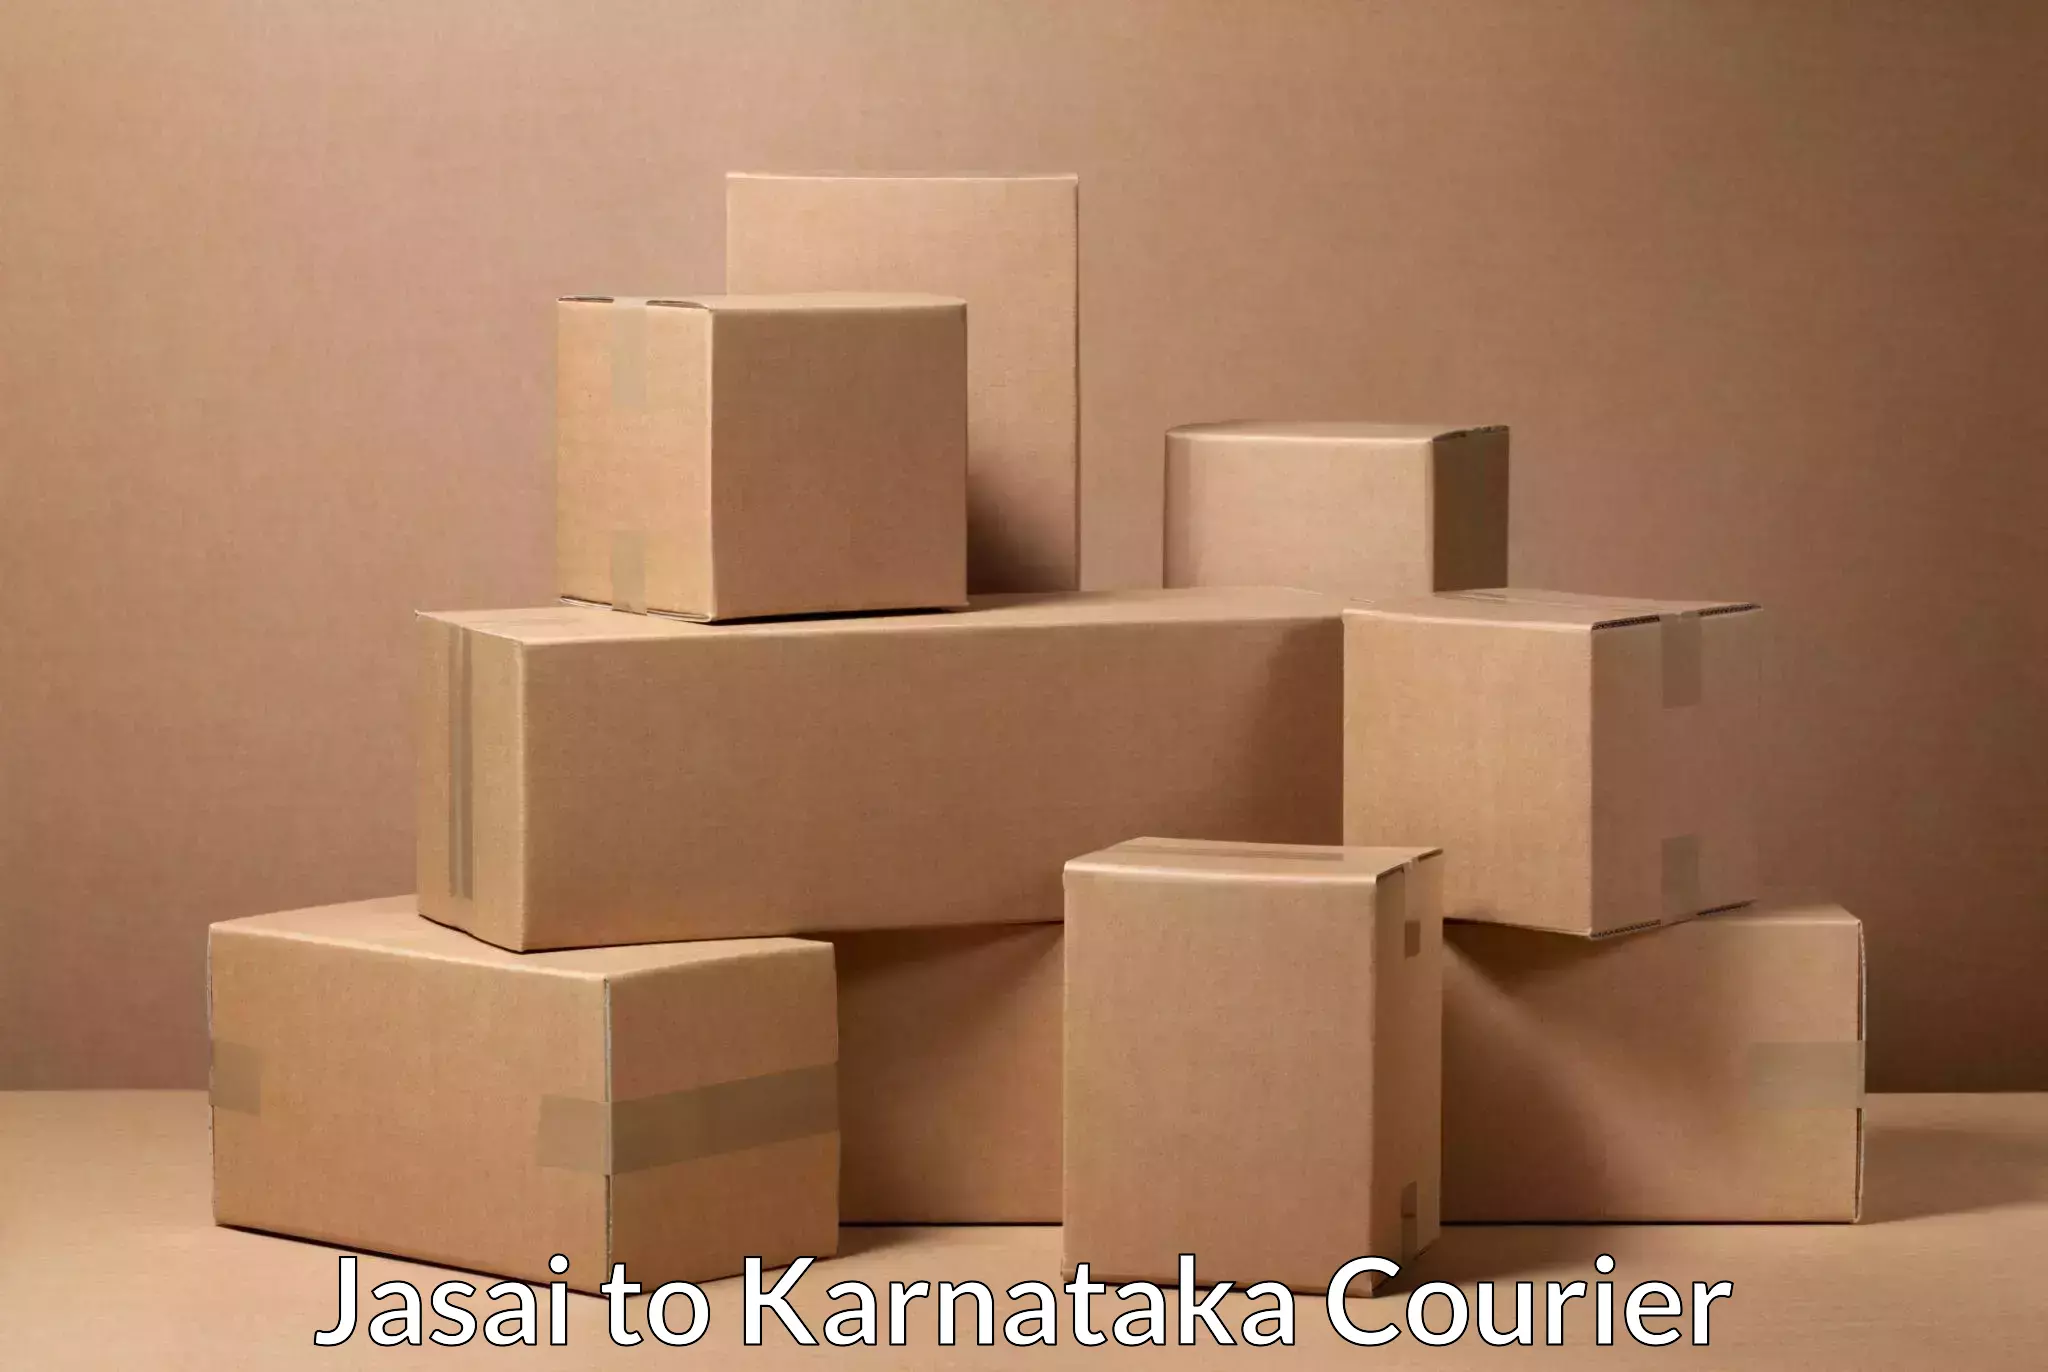 Flexible delivery schedules in Jasai to Karnataka